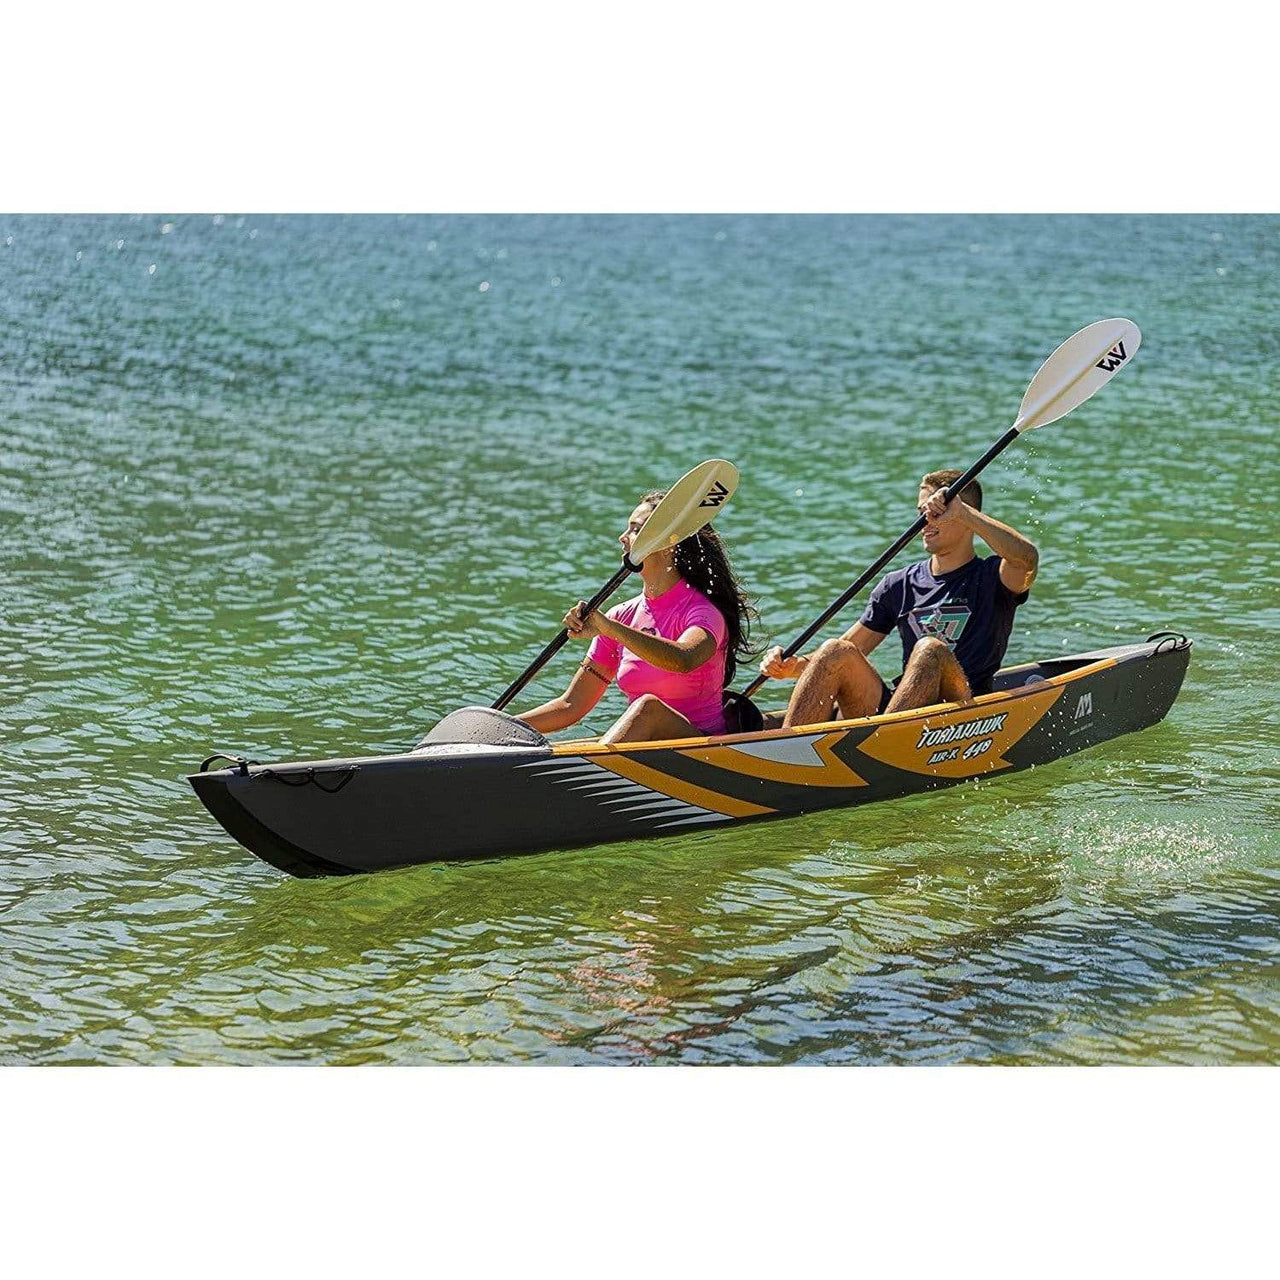 Kayak Hinchable Aqua Marina Tomahawk 2 Personas Alta presión